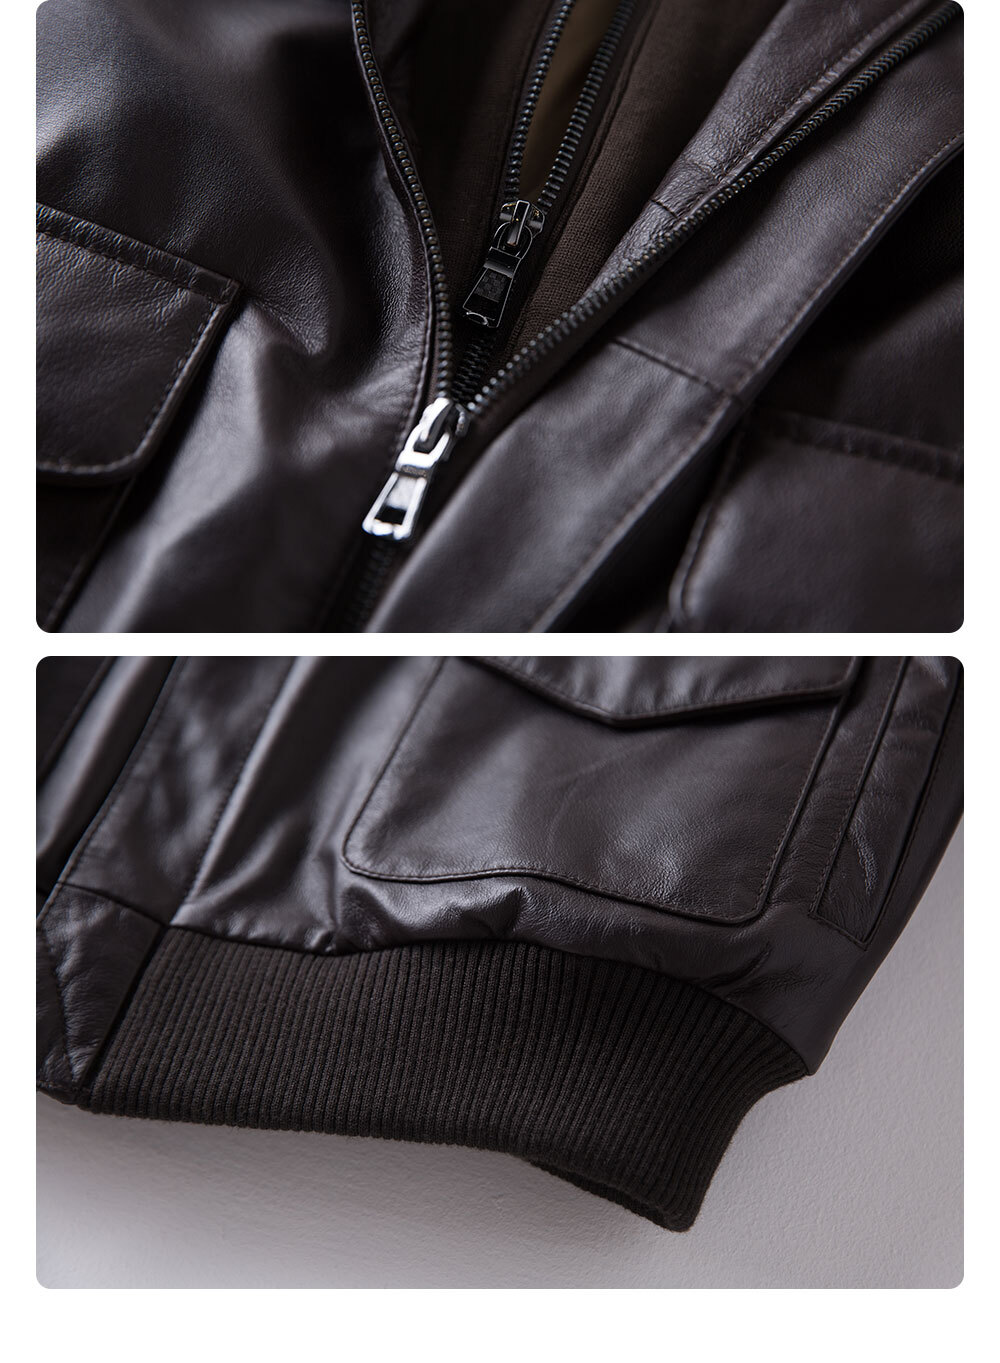 Men's Hooded Leather Bomber Jacket MXGX173 Lambskin leather moto hooded jacket brands| men's lambskin hooded leather jacket brands